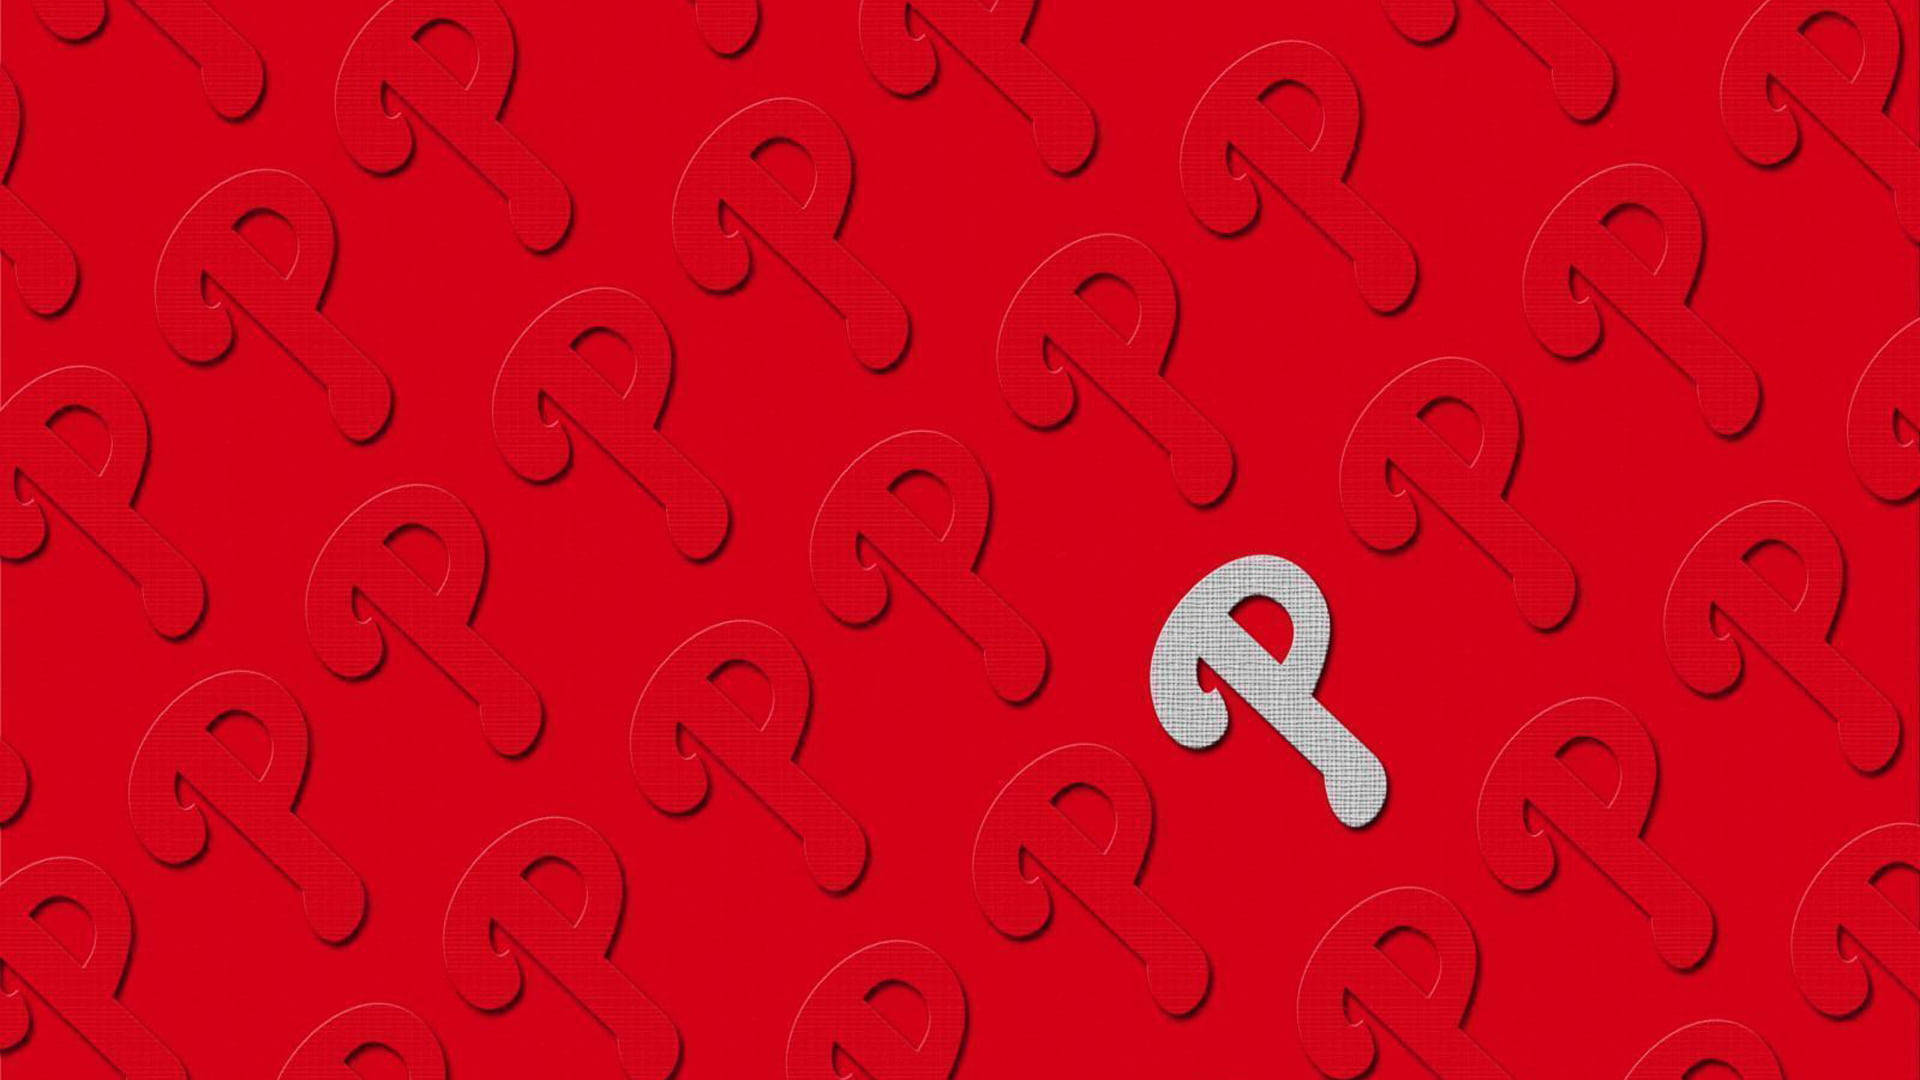 Radiant Red 'p' Letter Image